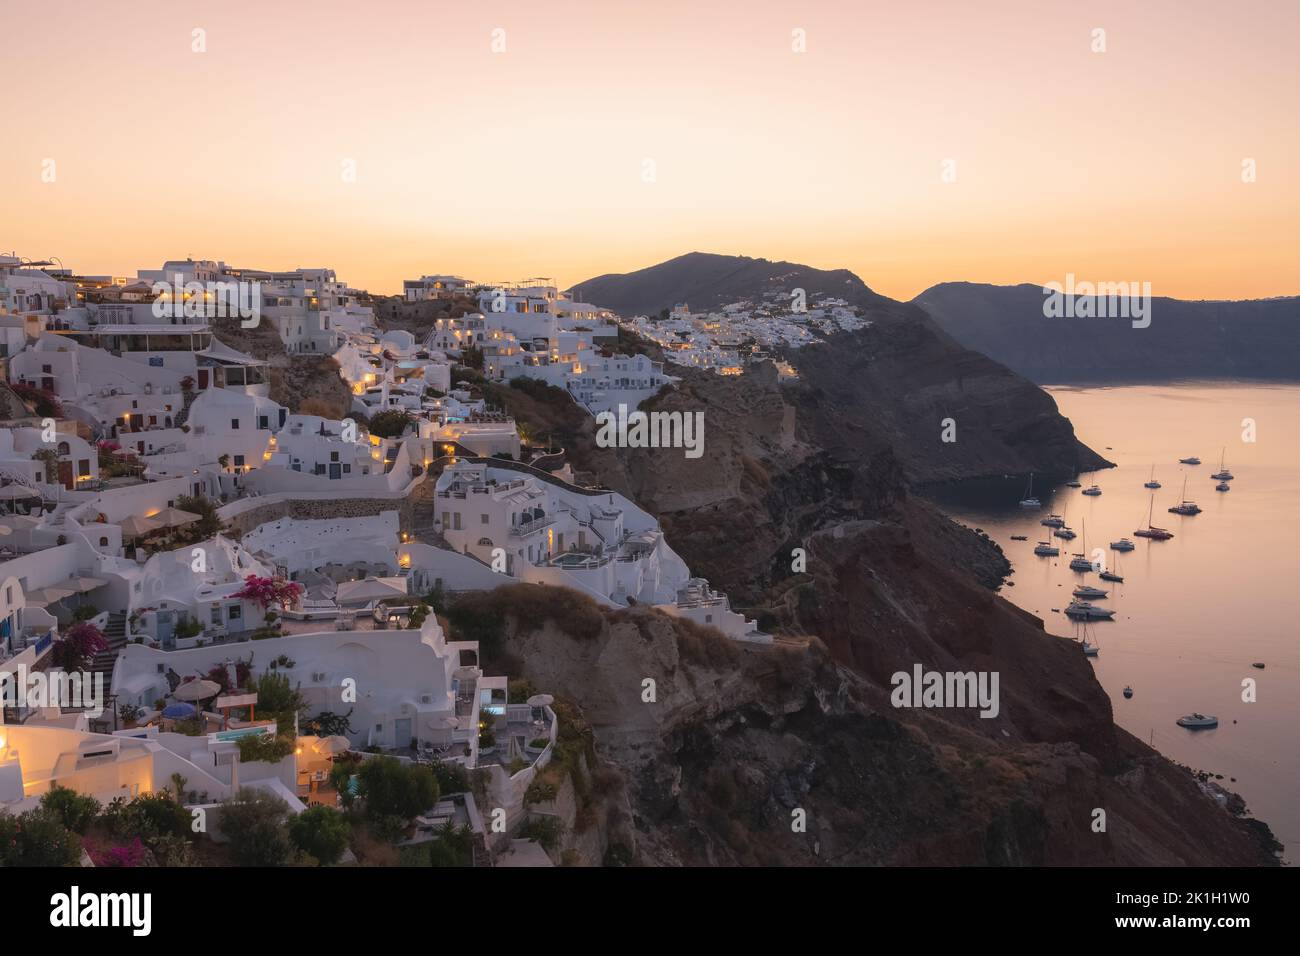 The hilltop village of Oia atop dramatic volcanic rock coastline over the Aegean Sea at sunset or sunrise on the Greek island of Santorini, Greece. Stock Photo